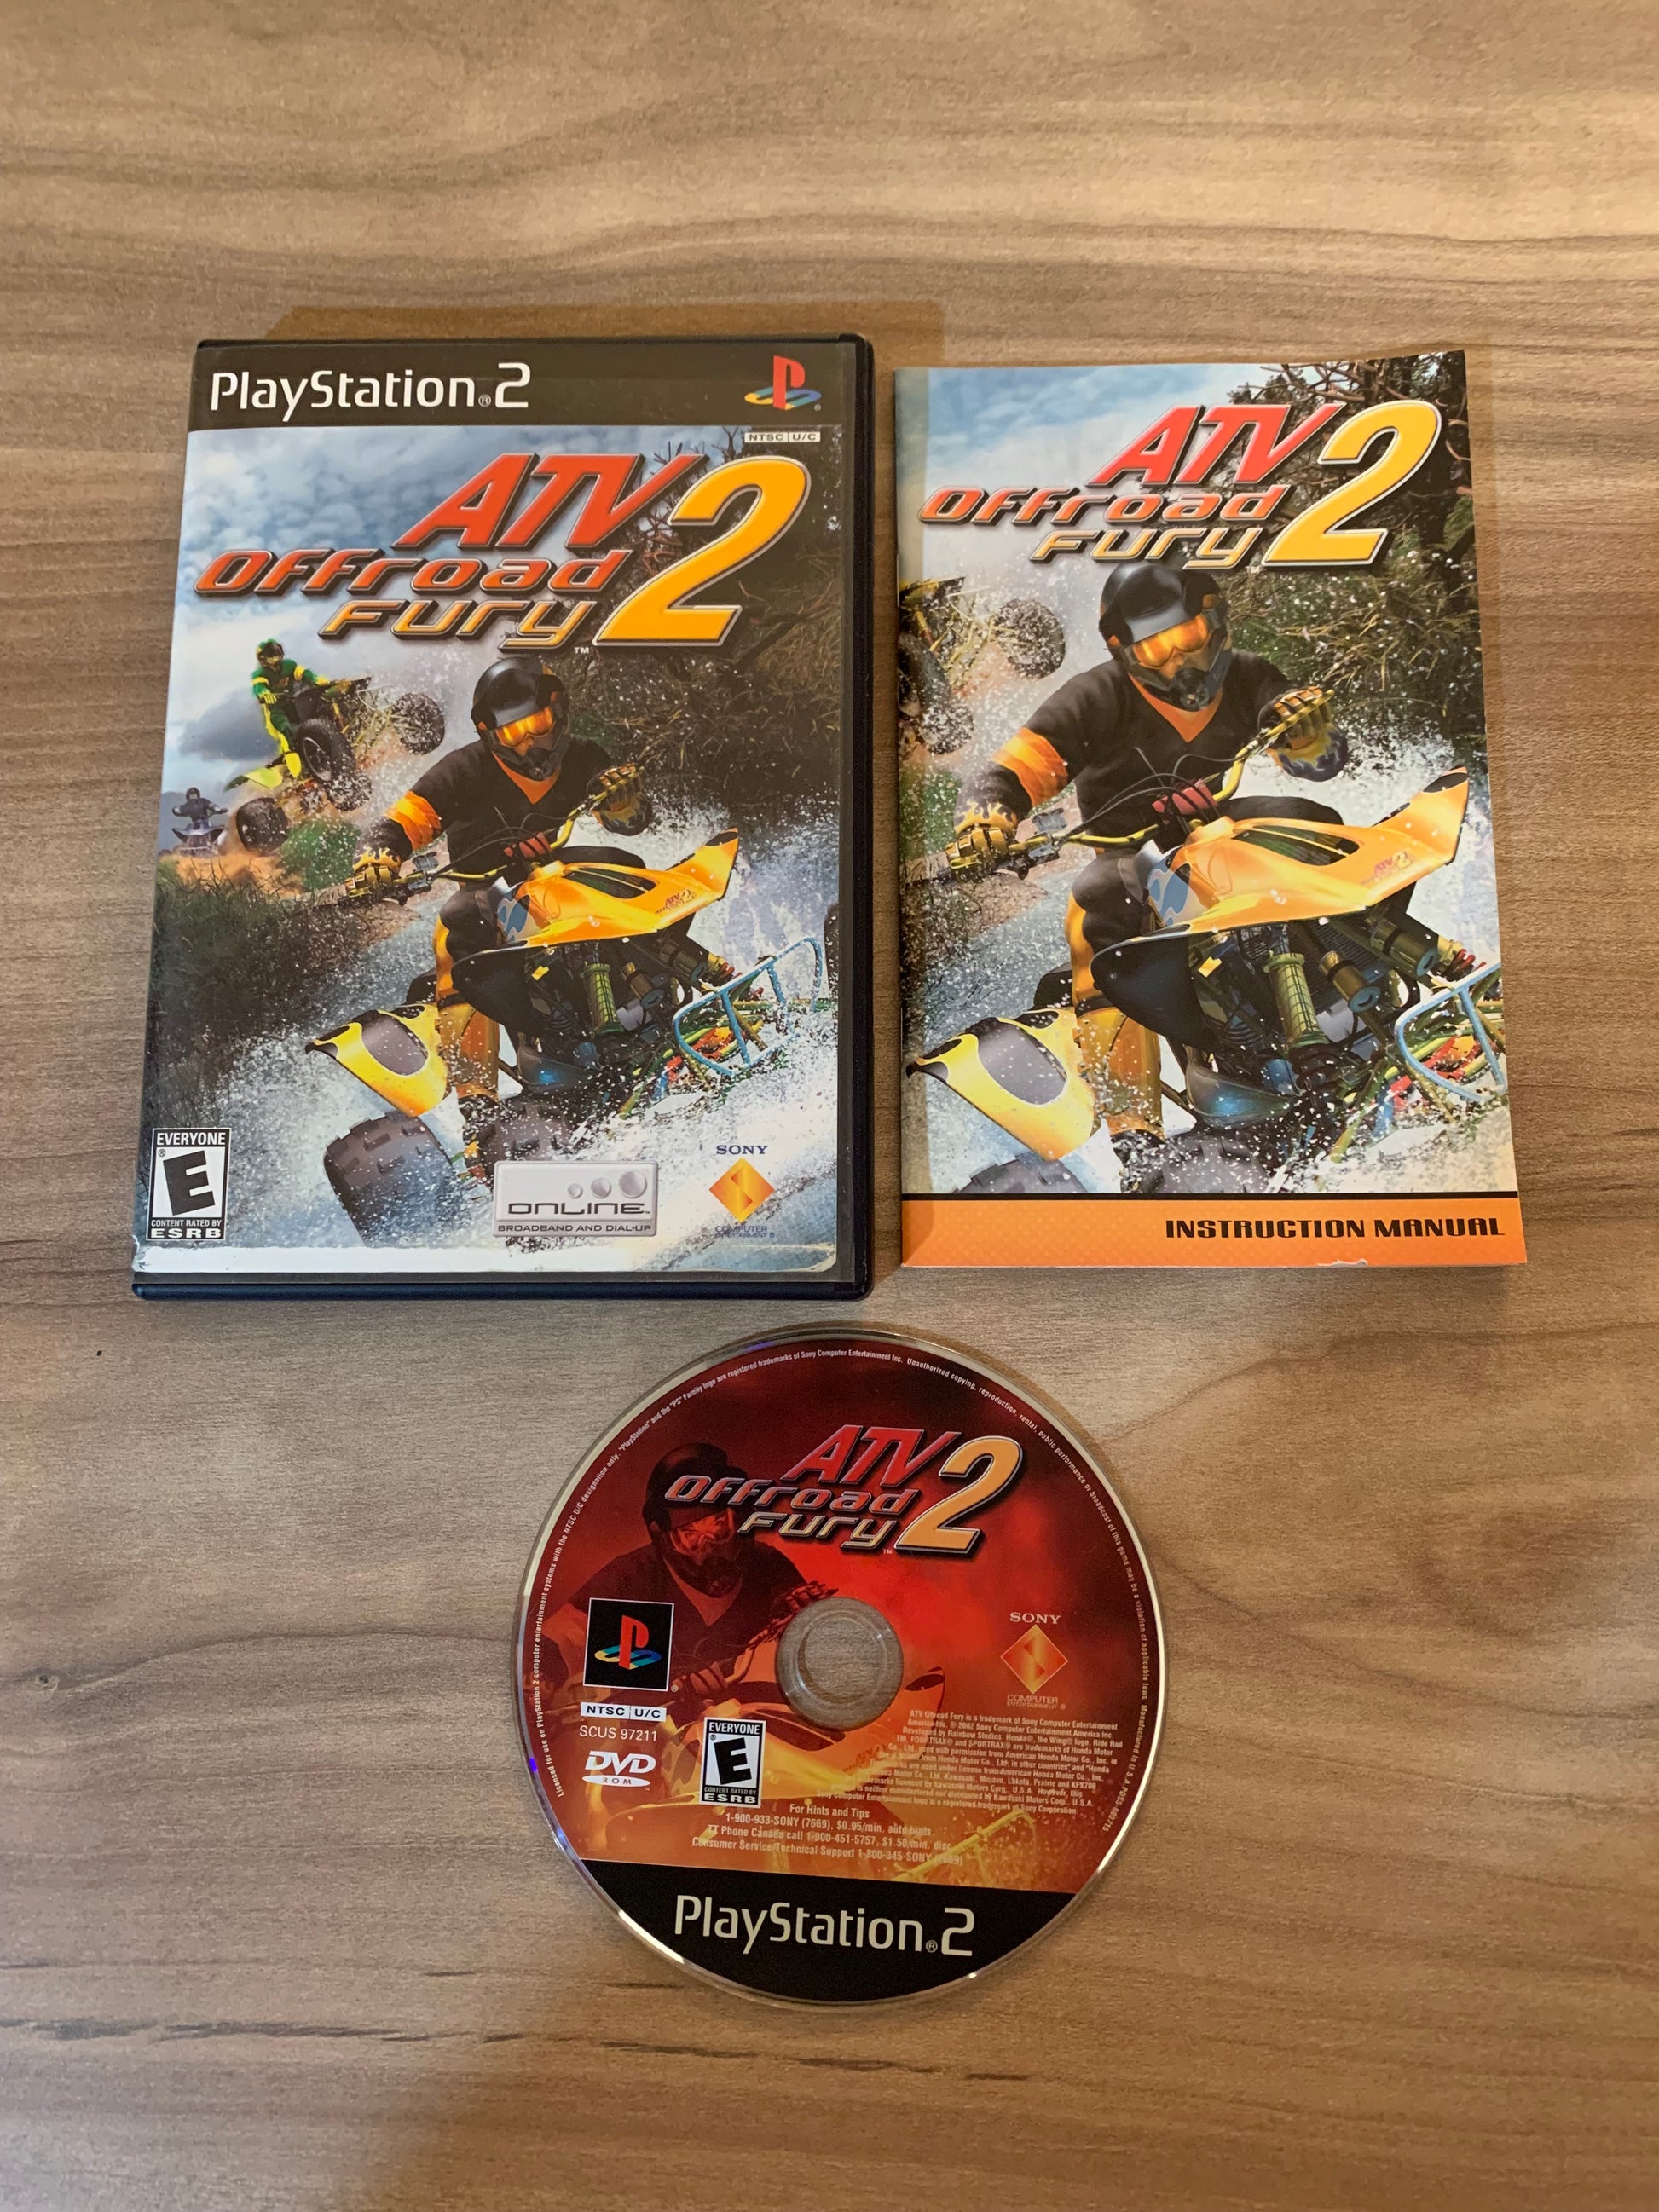 PiXEL-RETRO.COM : SONY PLAYSTATION 2 (PS2) COMPLET CIB BOX MANUAL GAME NTSC ATV OFFROAD FURY 2